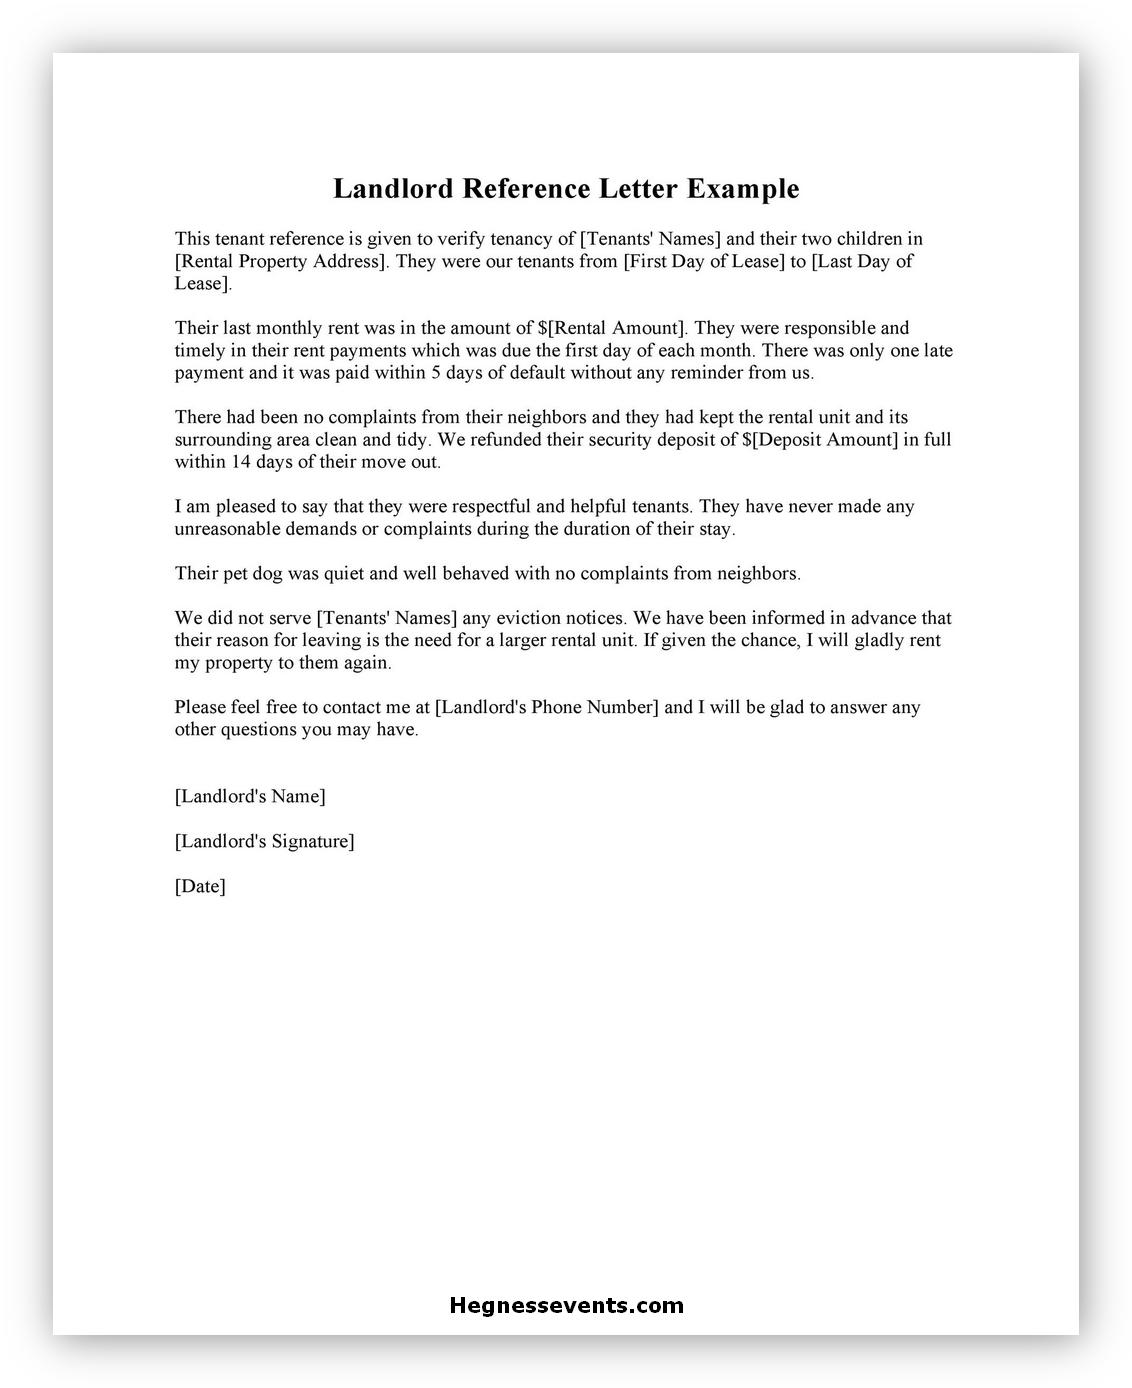 Landlord Reference Letter 04